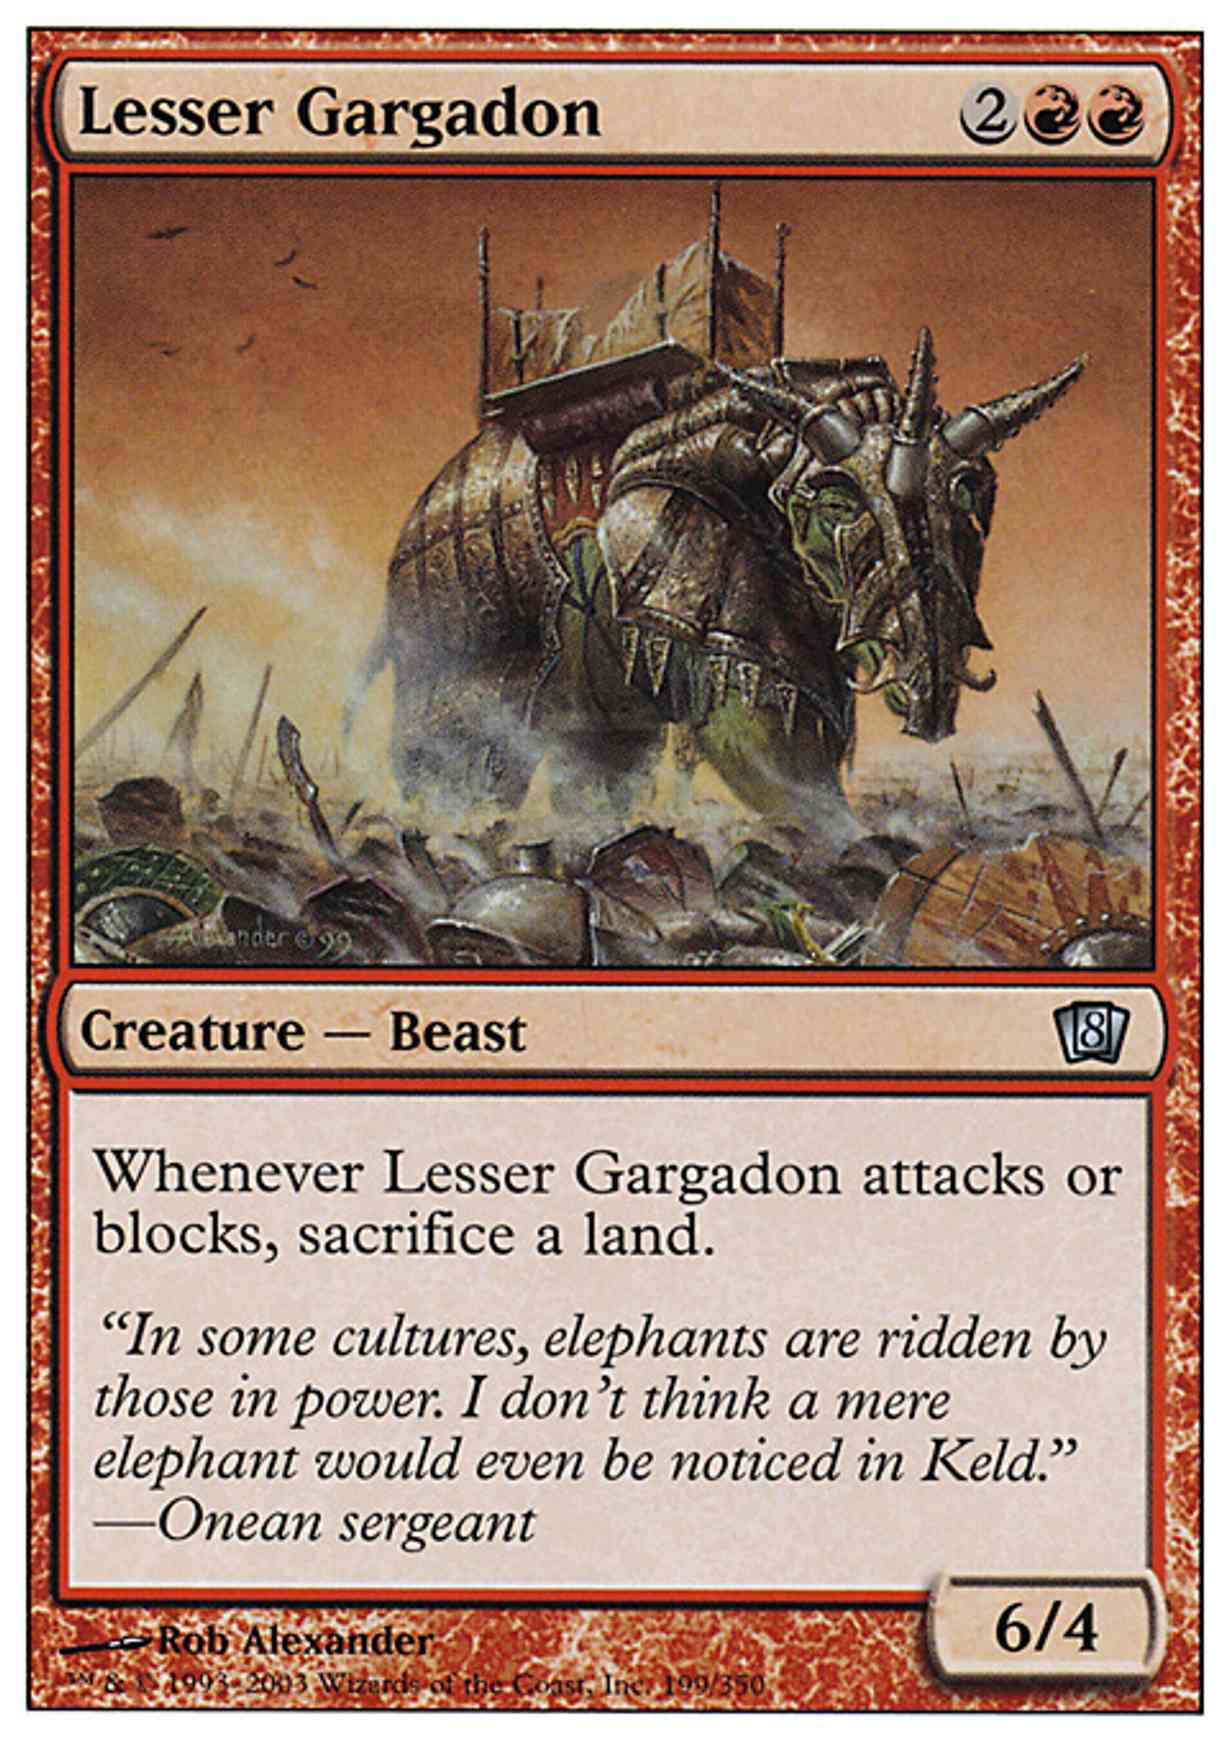 Lesser Gargadon magic card front